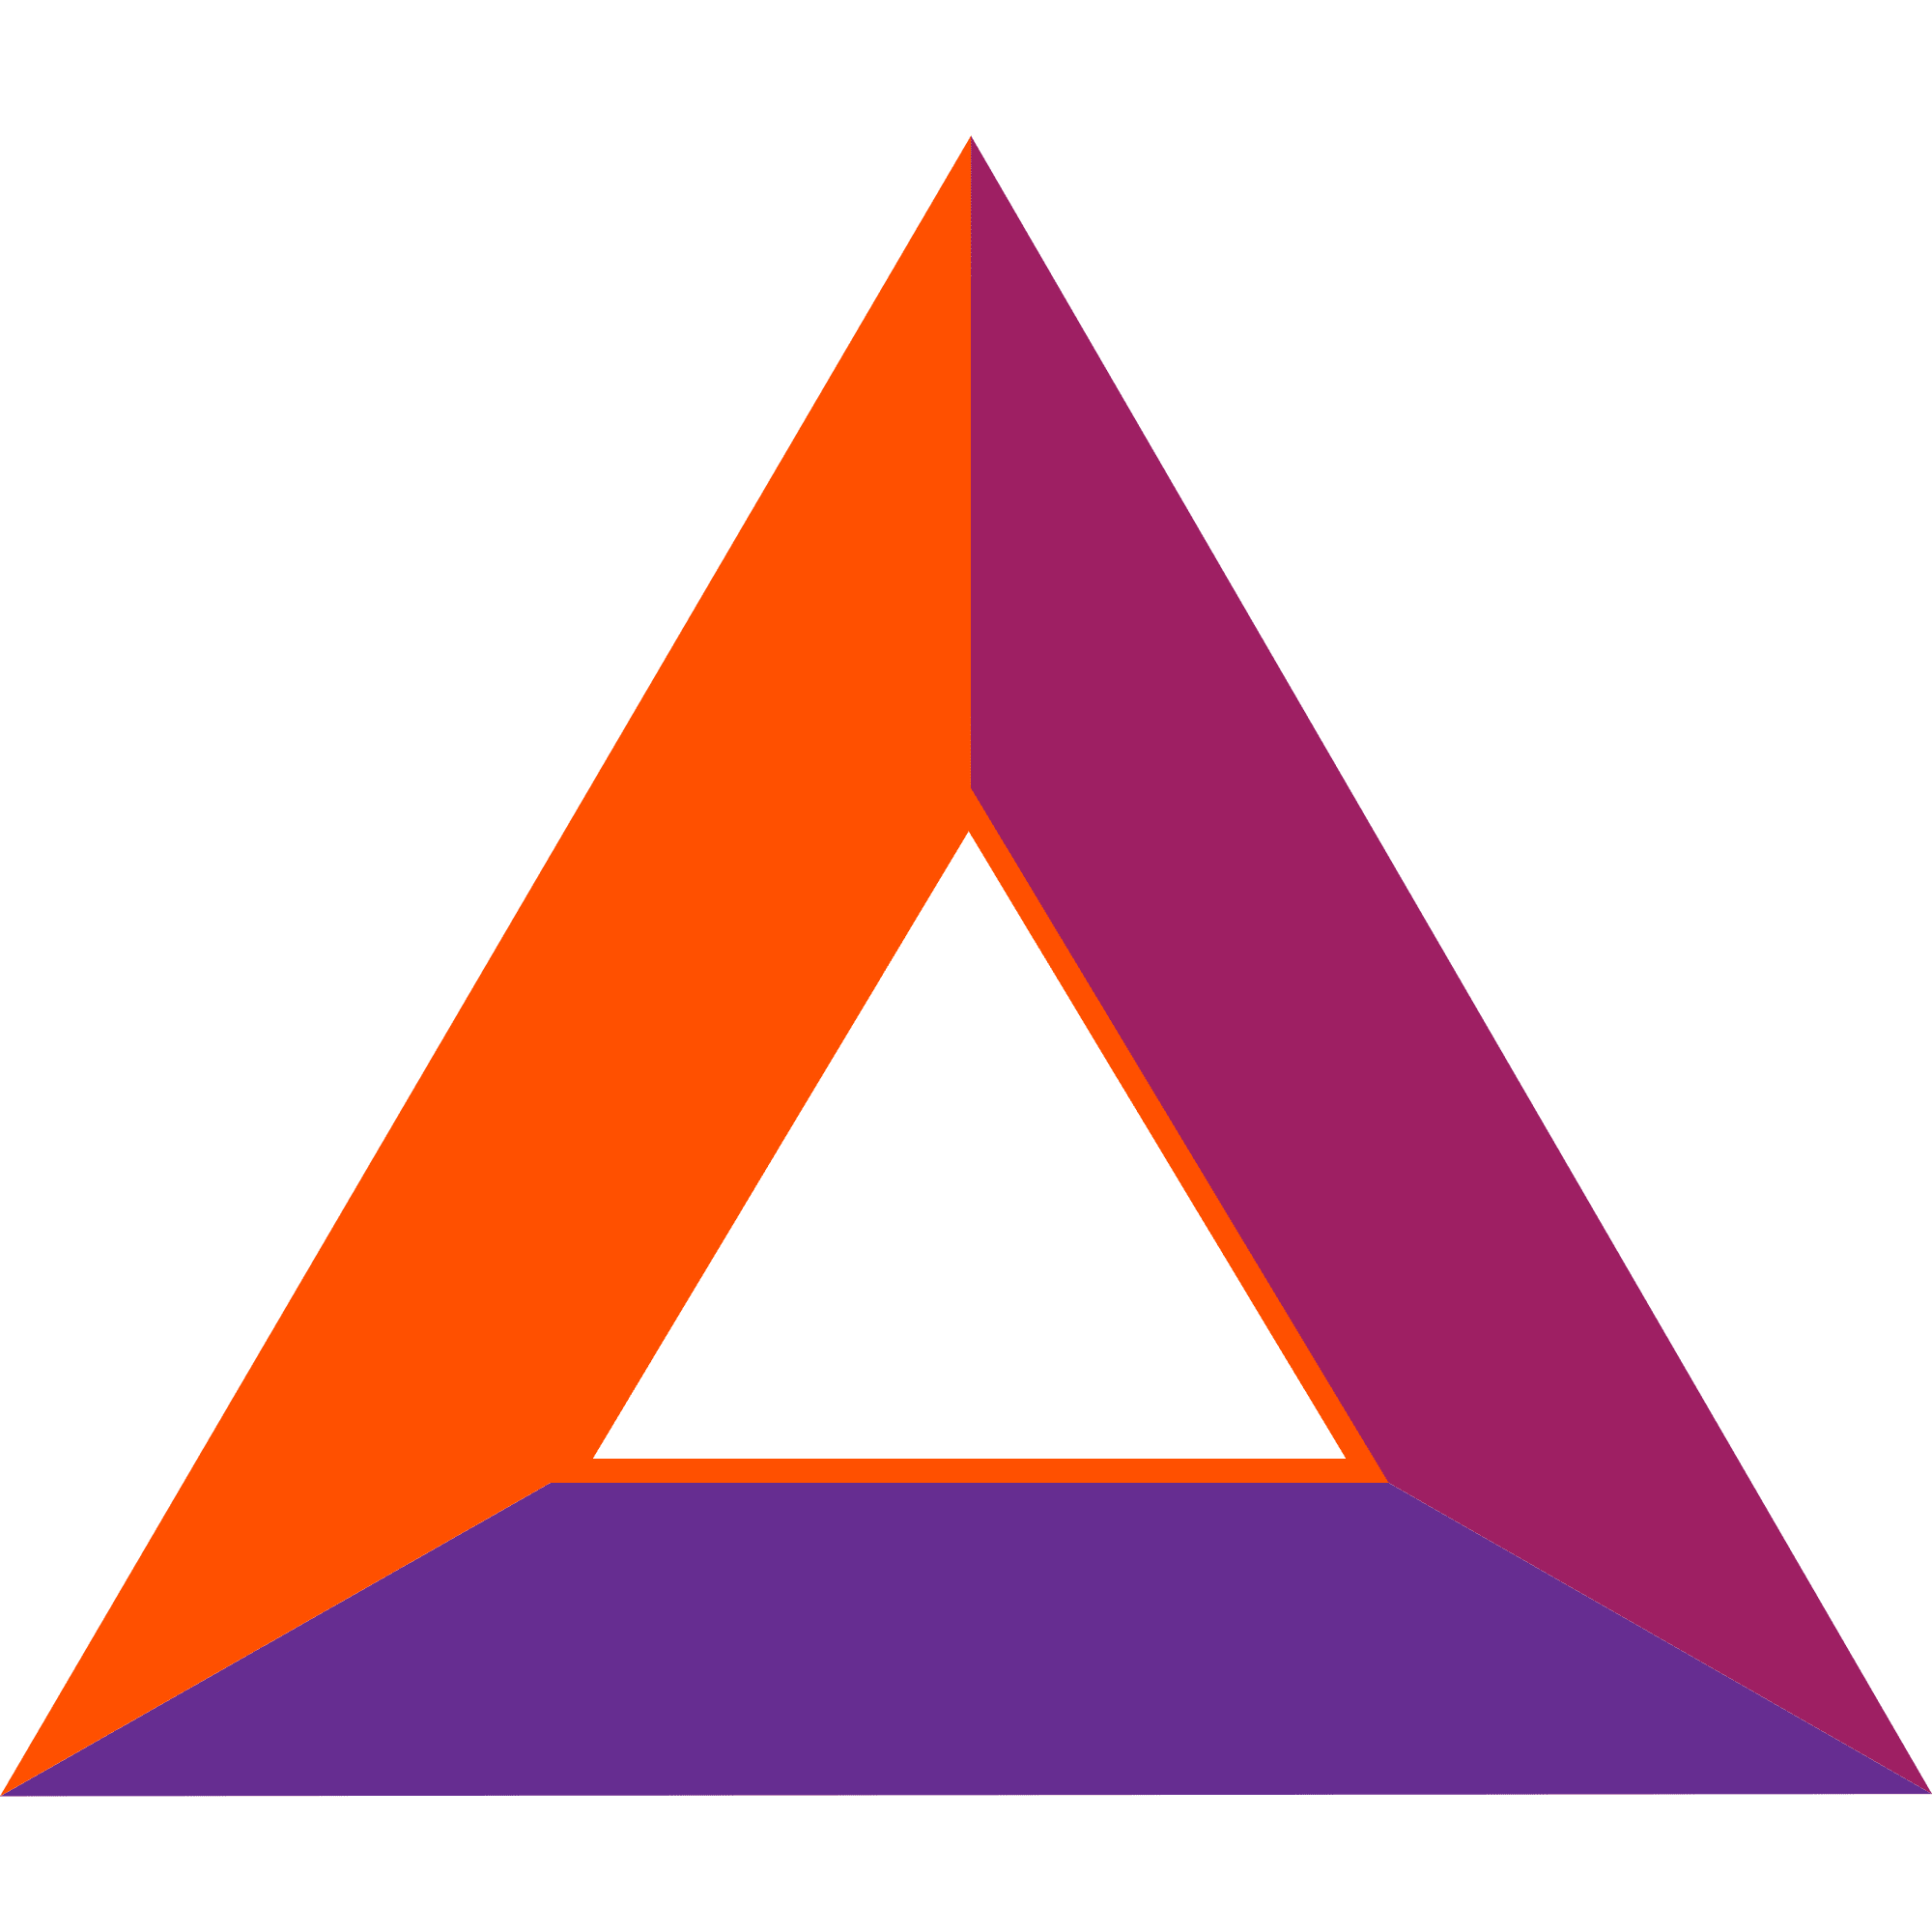 Basic Attention Token logo in svg format